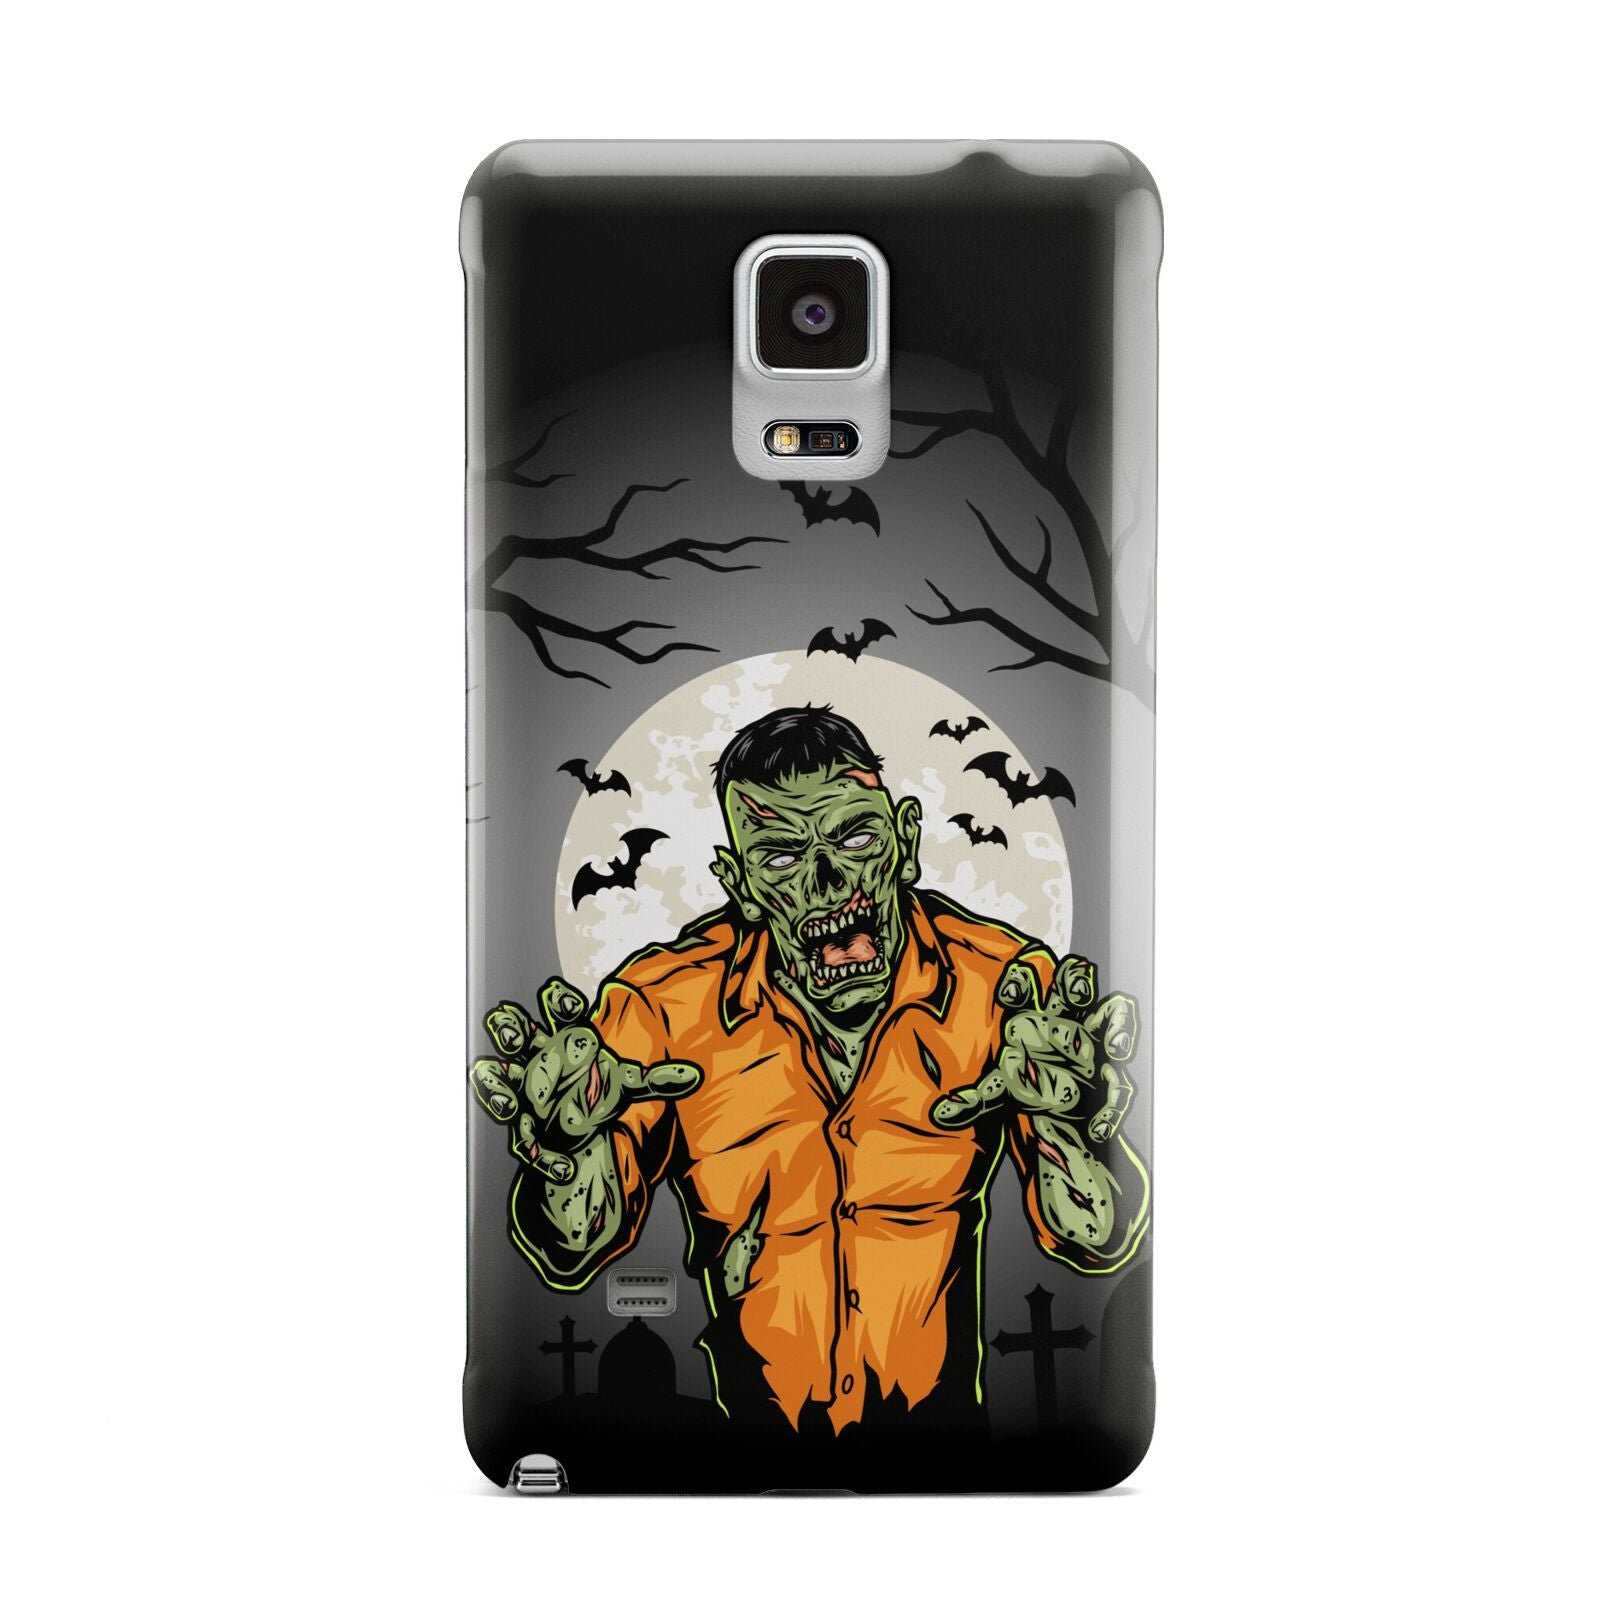 Zombie Night Samsung Galaxy Note 4 Case